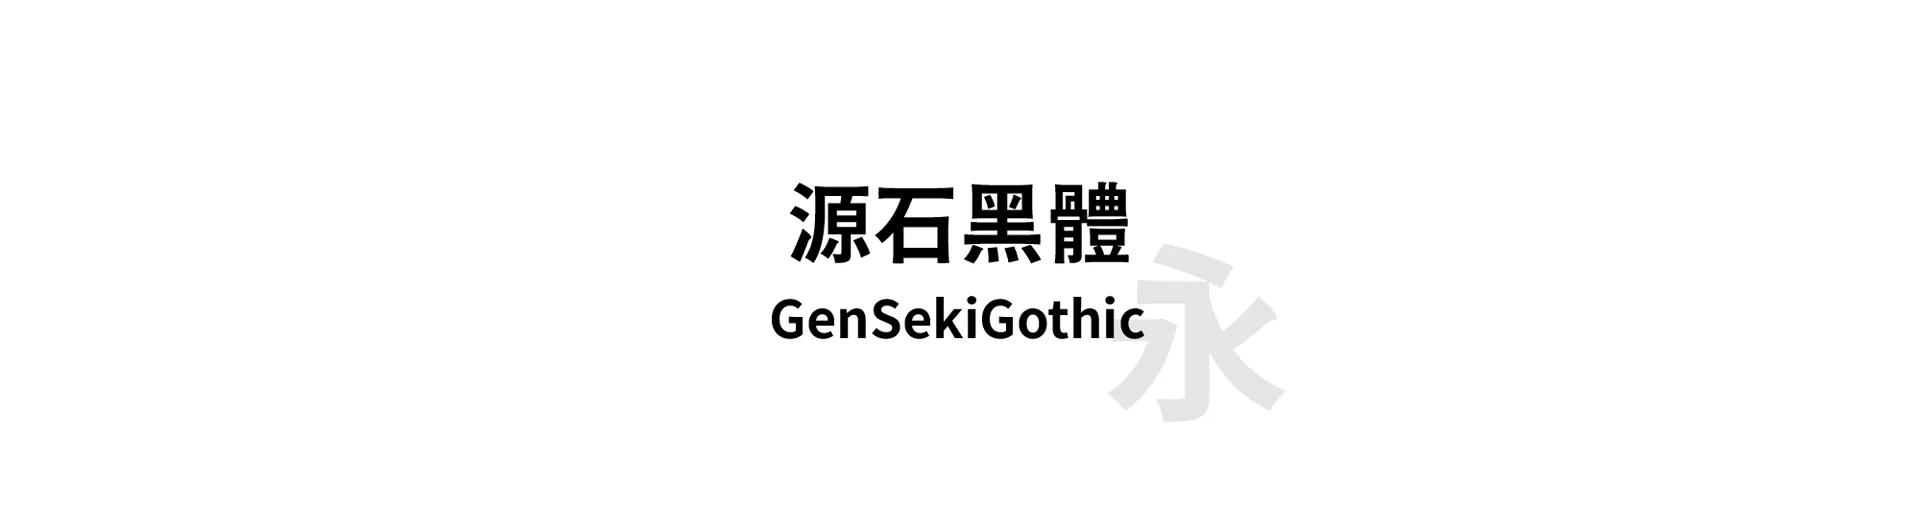 GenSekiGothic